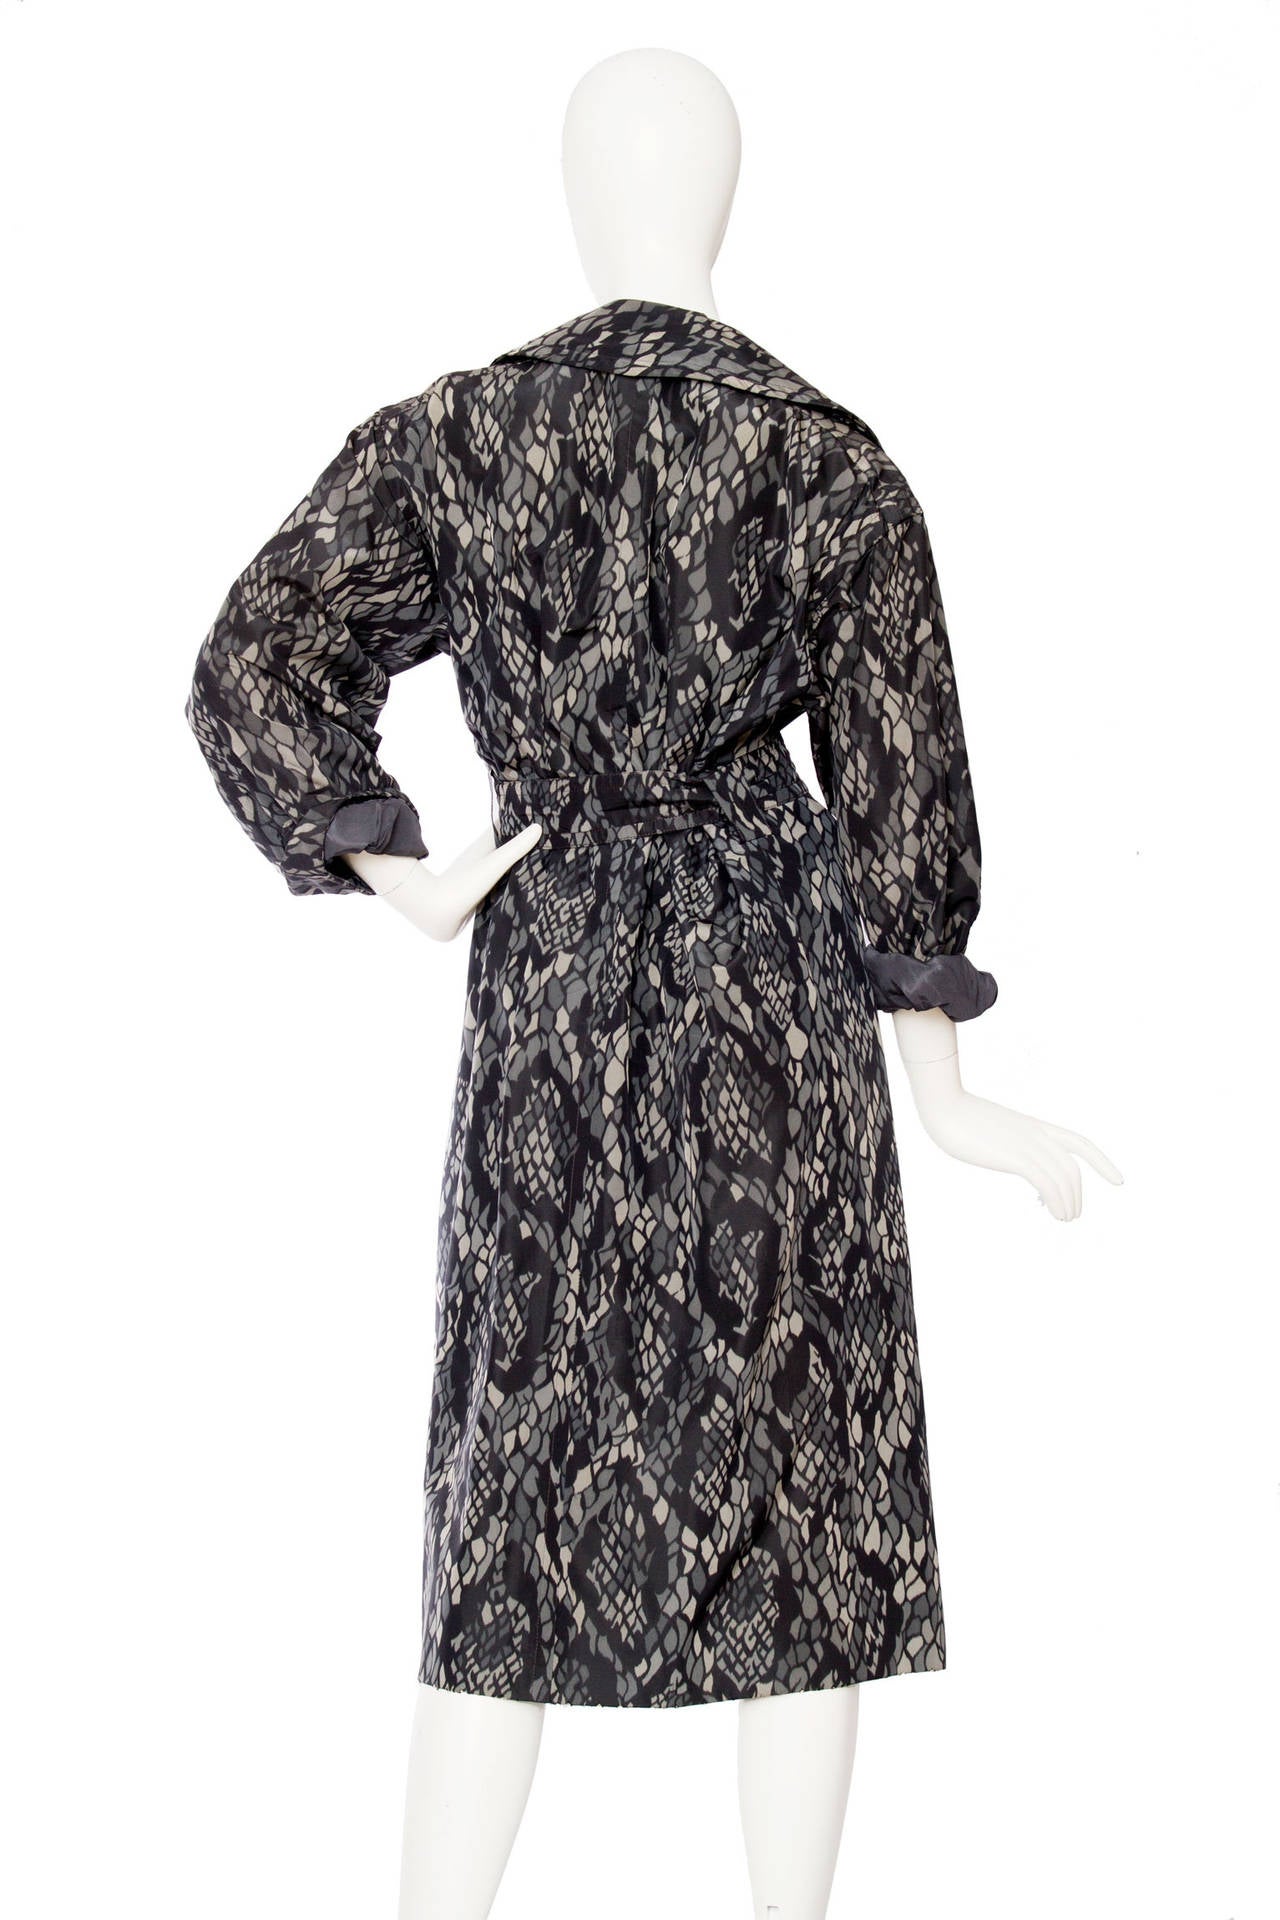 Women's 1980s Yves Saint Laurent Couture Trench Coat